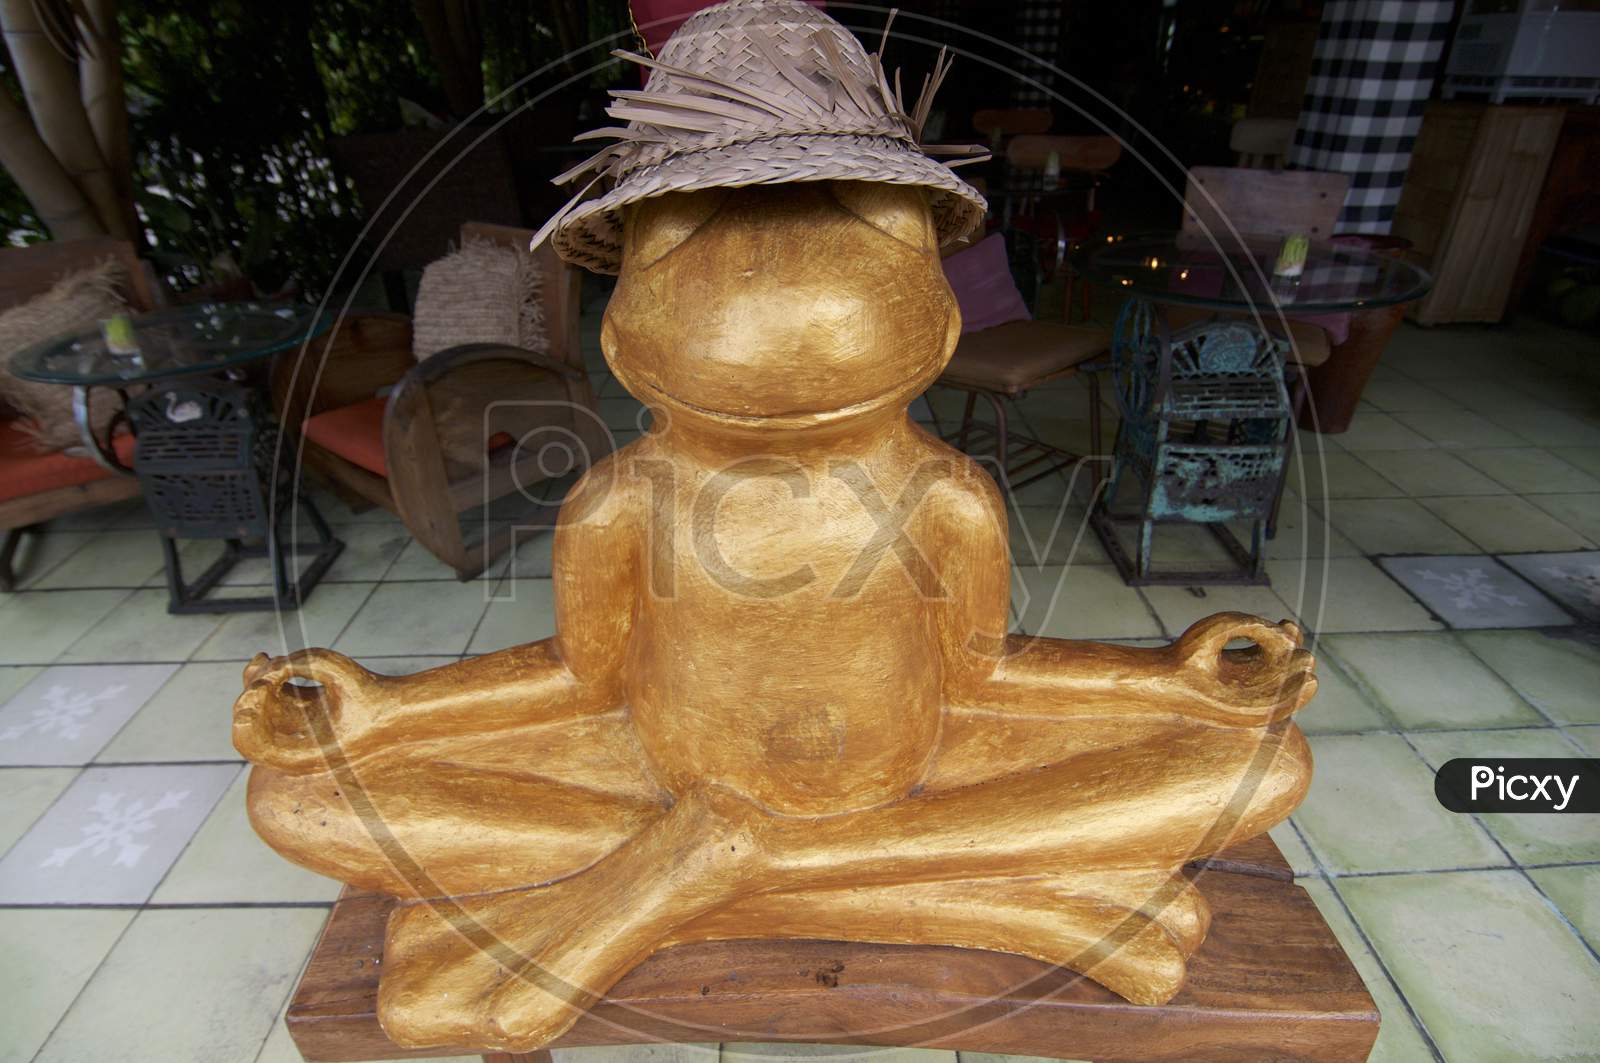 Golden Frog Statue In A Meditating Pose